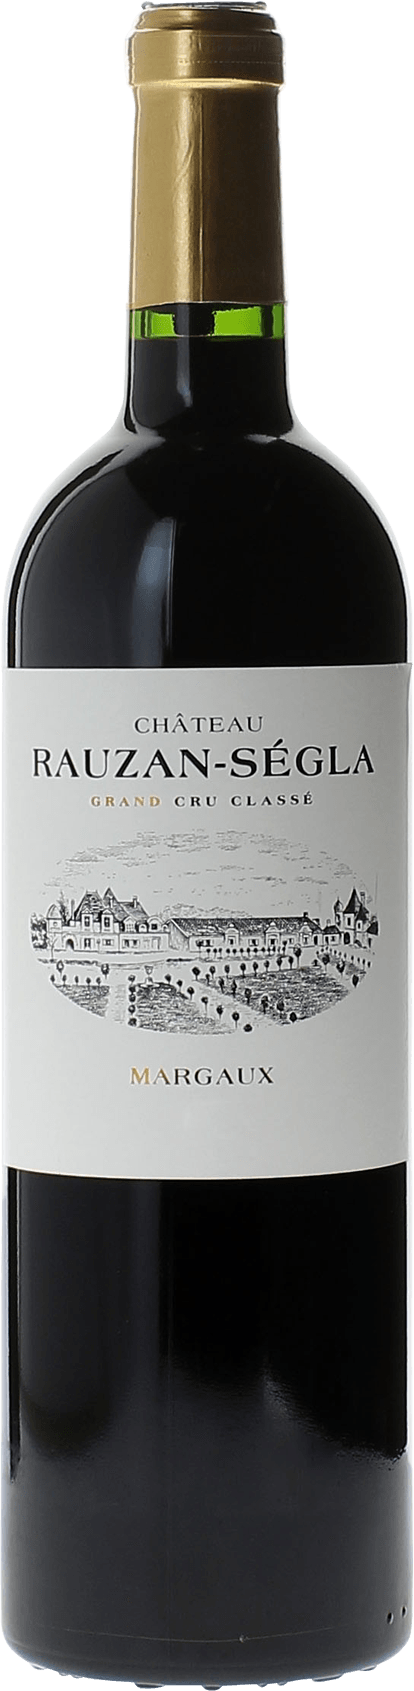 Rauzan-segla 2013 2me Grand cru class Margaux, Bordeaux rouge